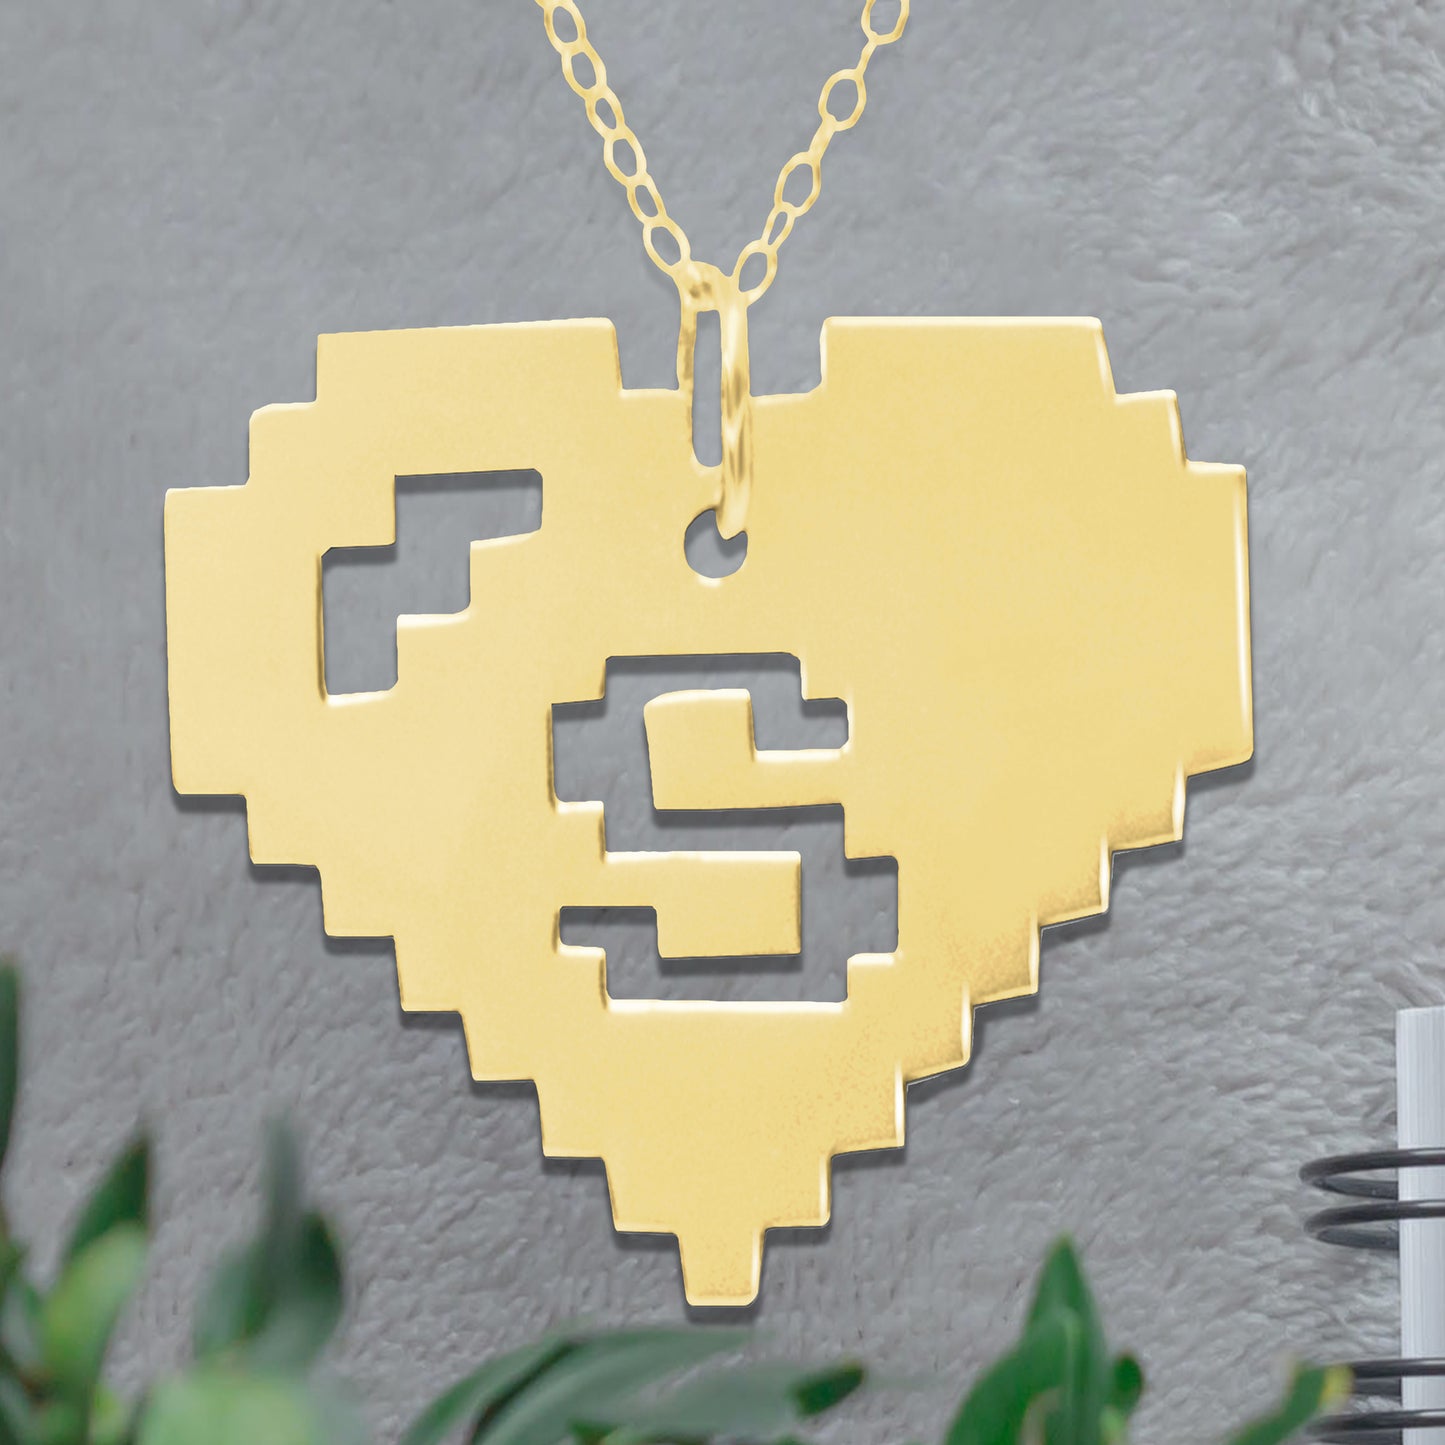 8 Bit Heart Initial Necklace